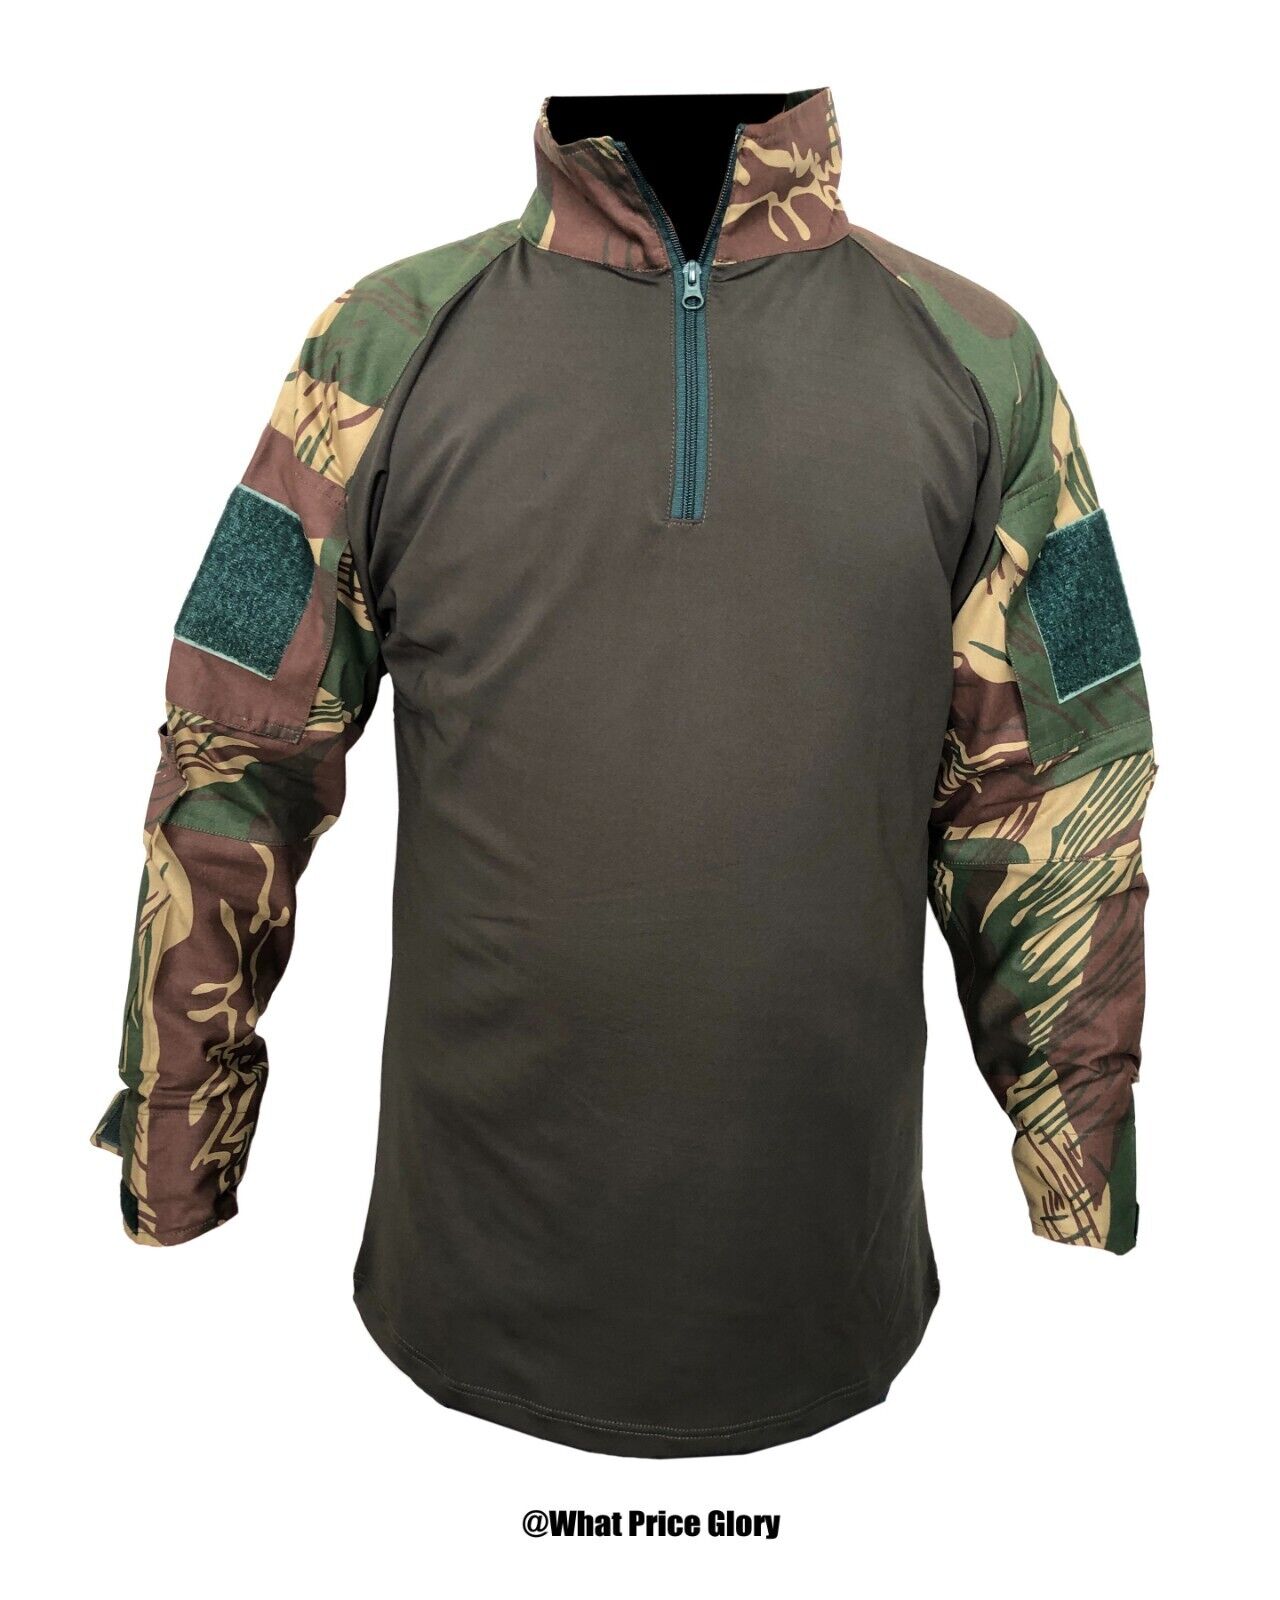 Modern Combat Shirt in Rhodesian Brushstroke Pattern Size 46